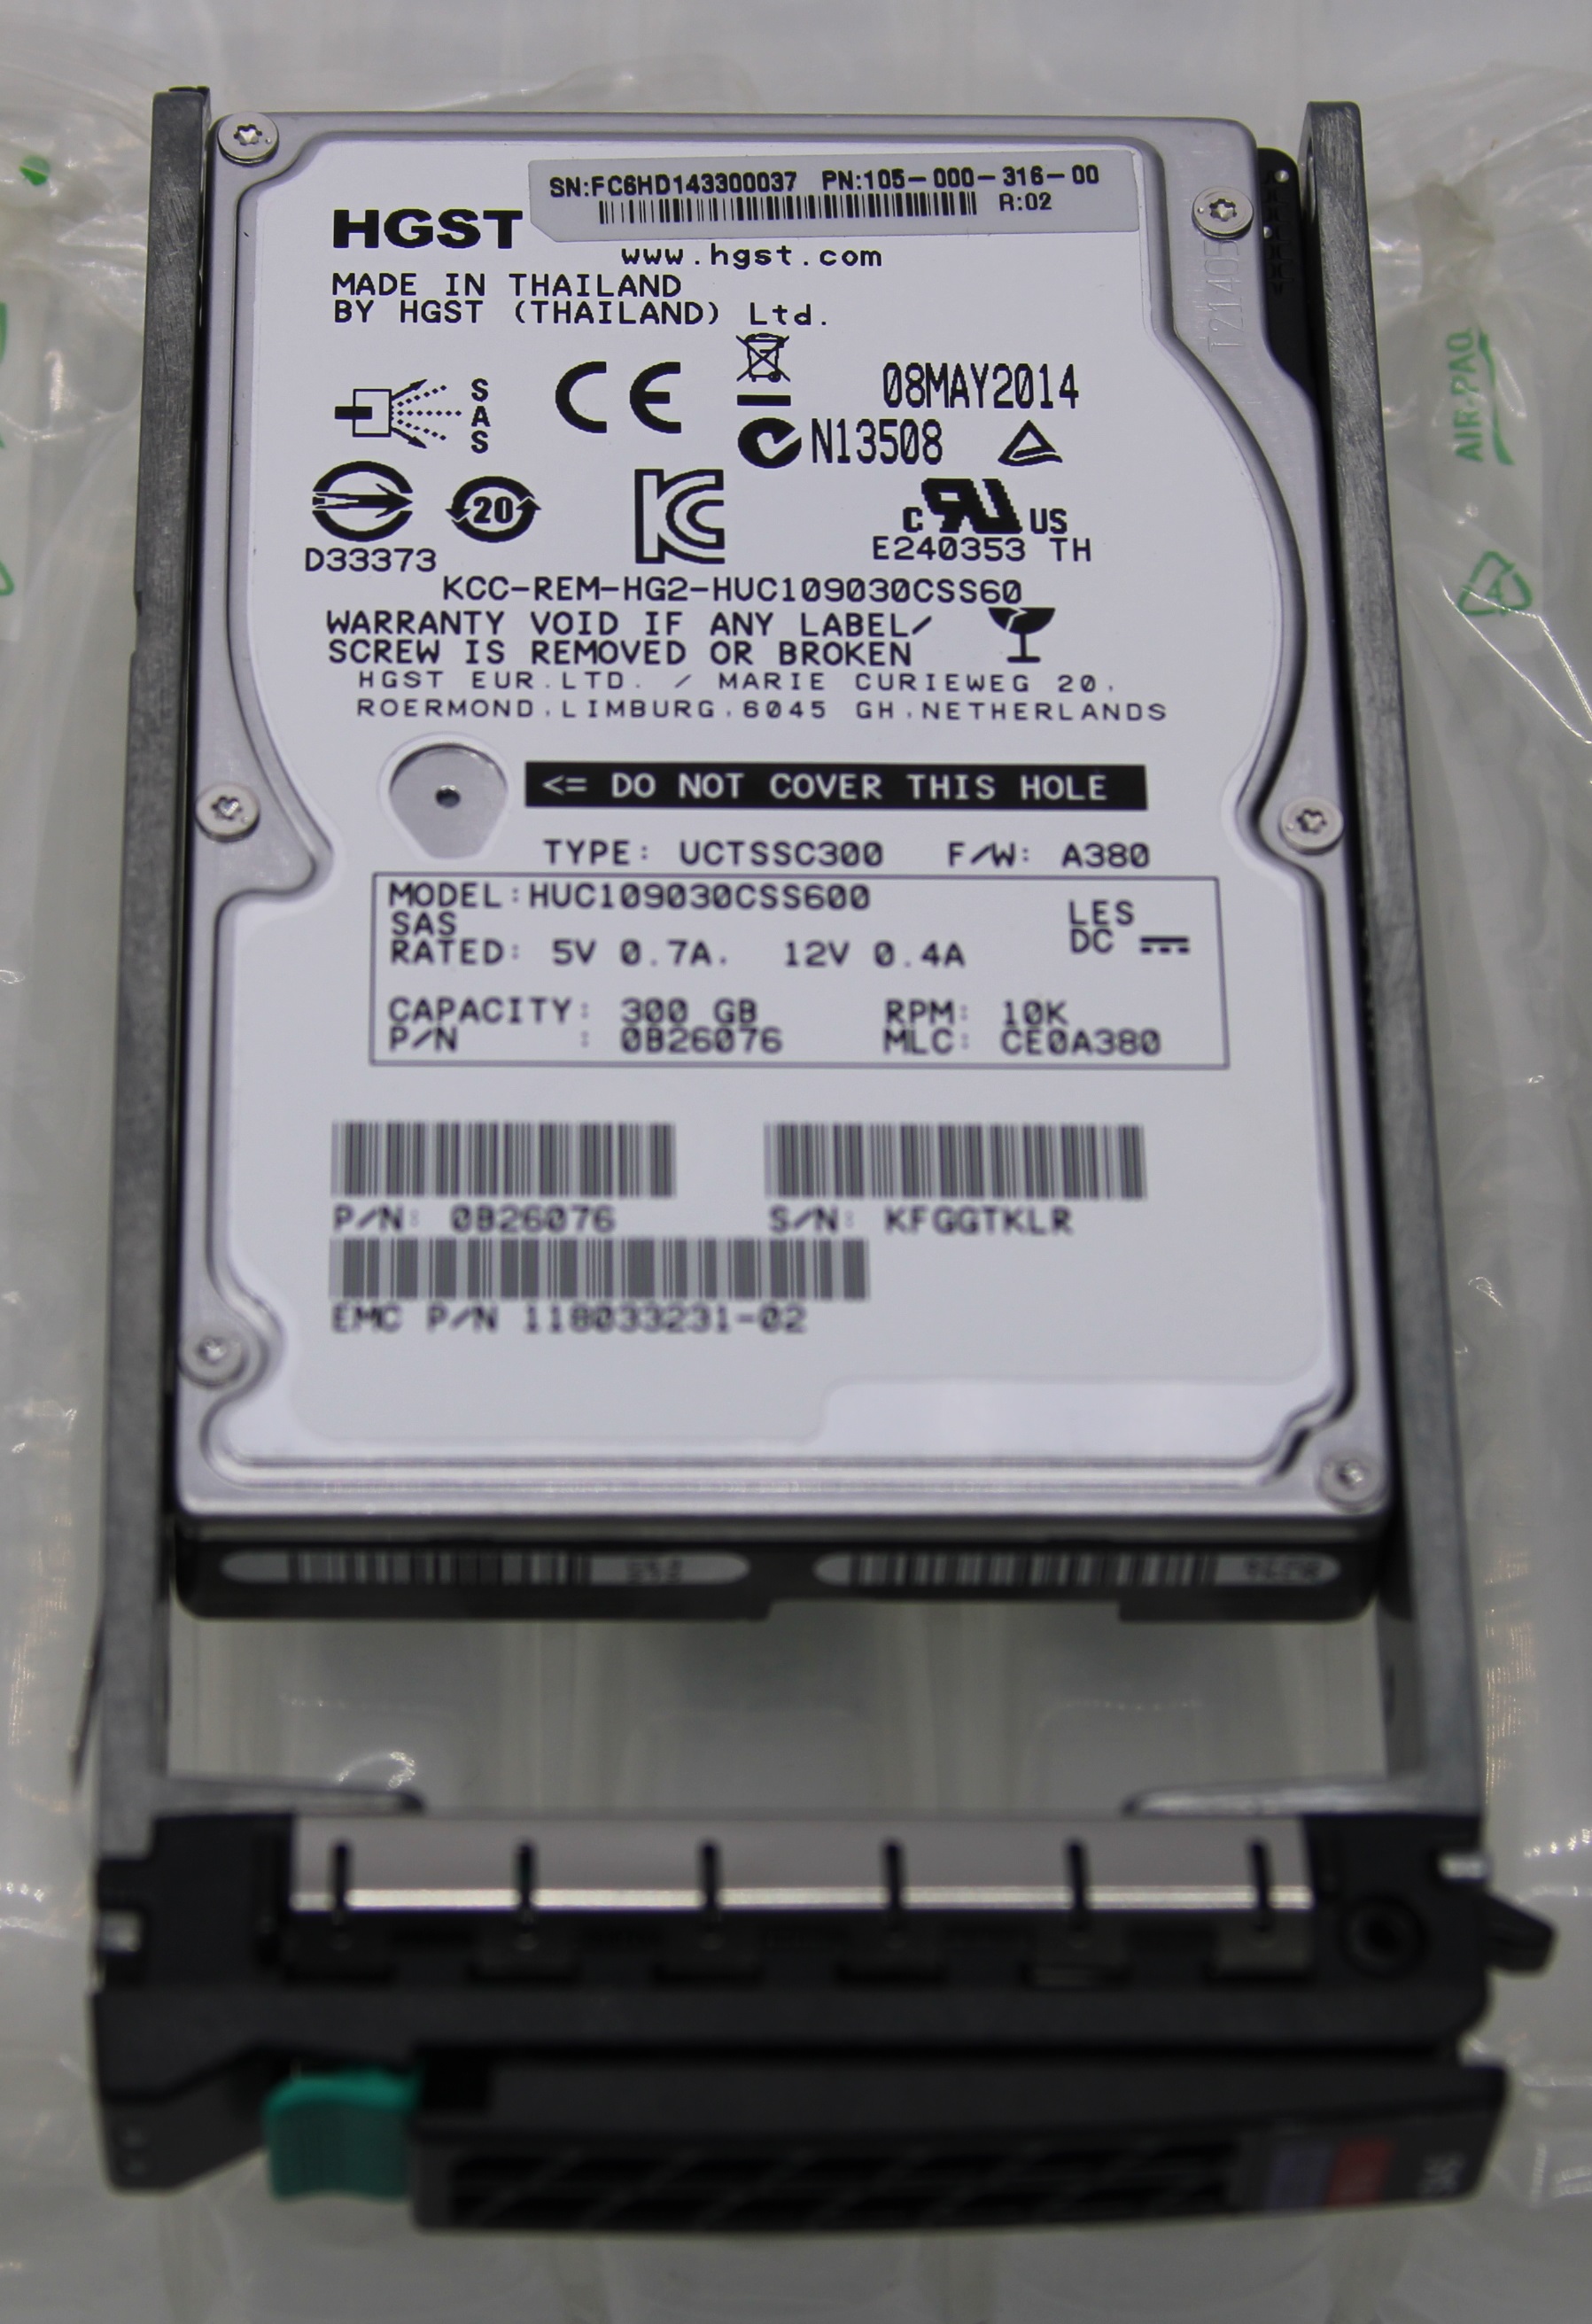 HGST EMC 300GB 10K 2.5